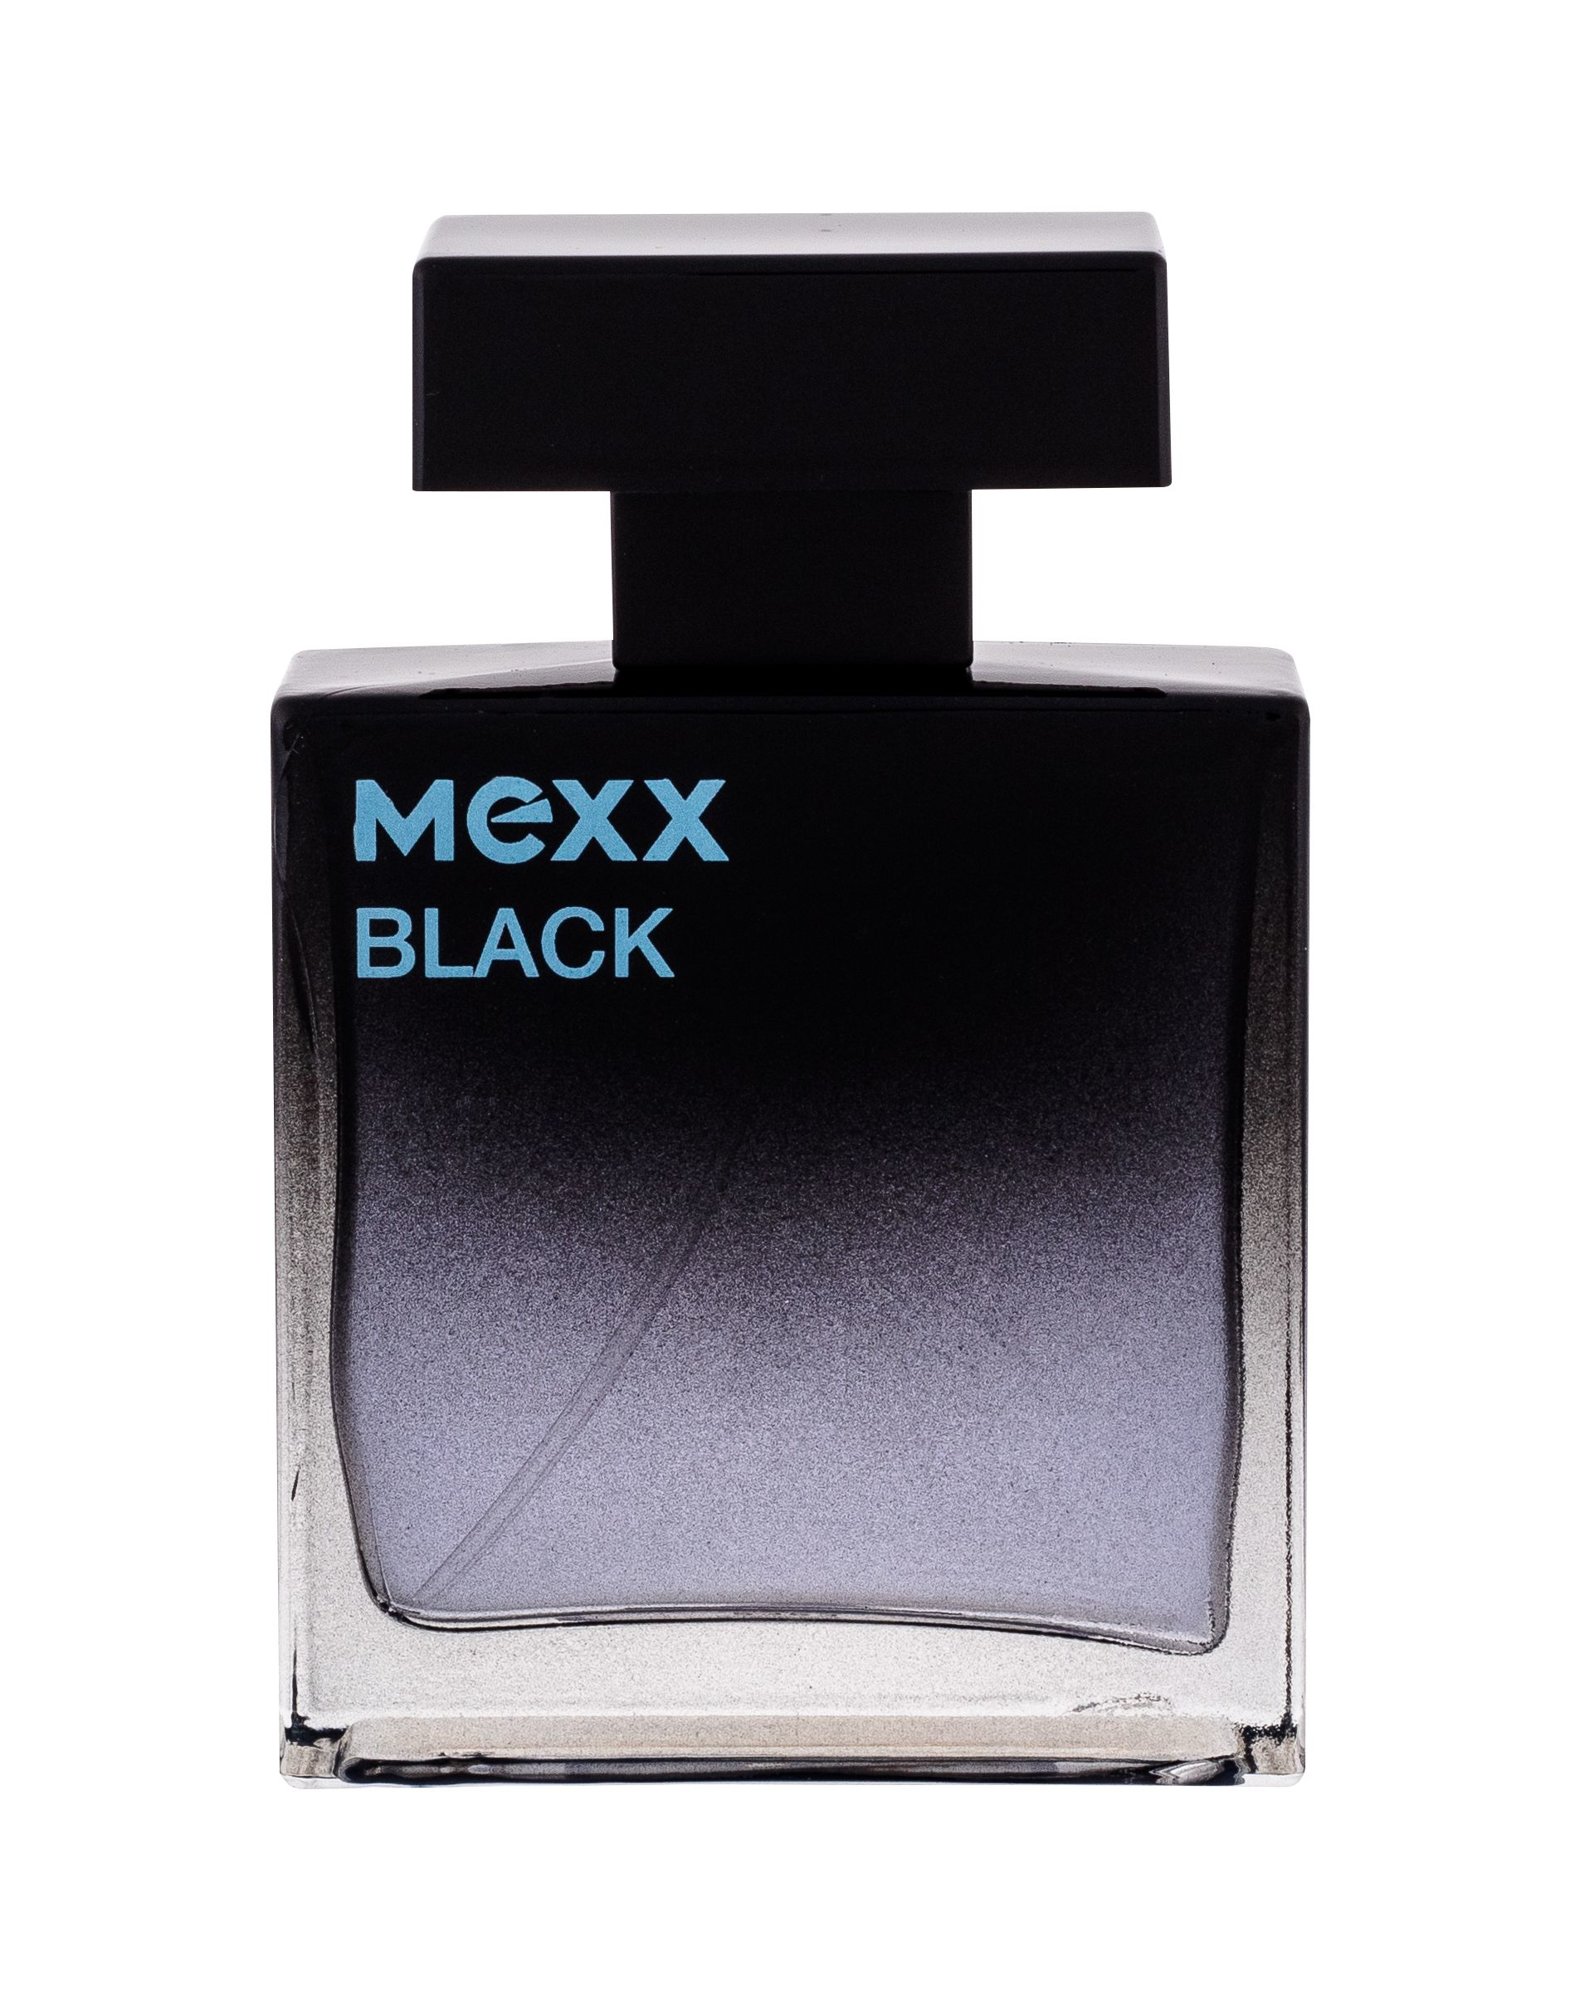 Mexx Black vanduo po skutimosi